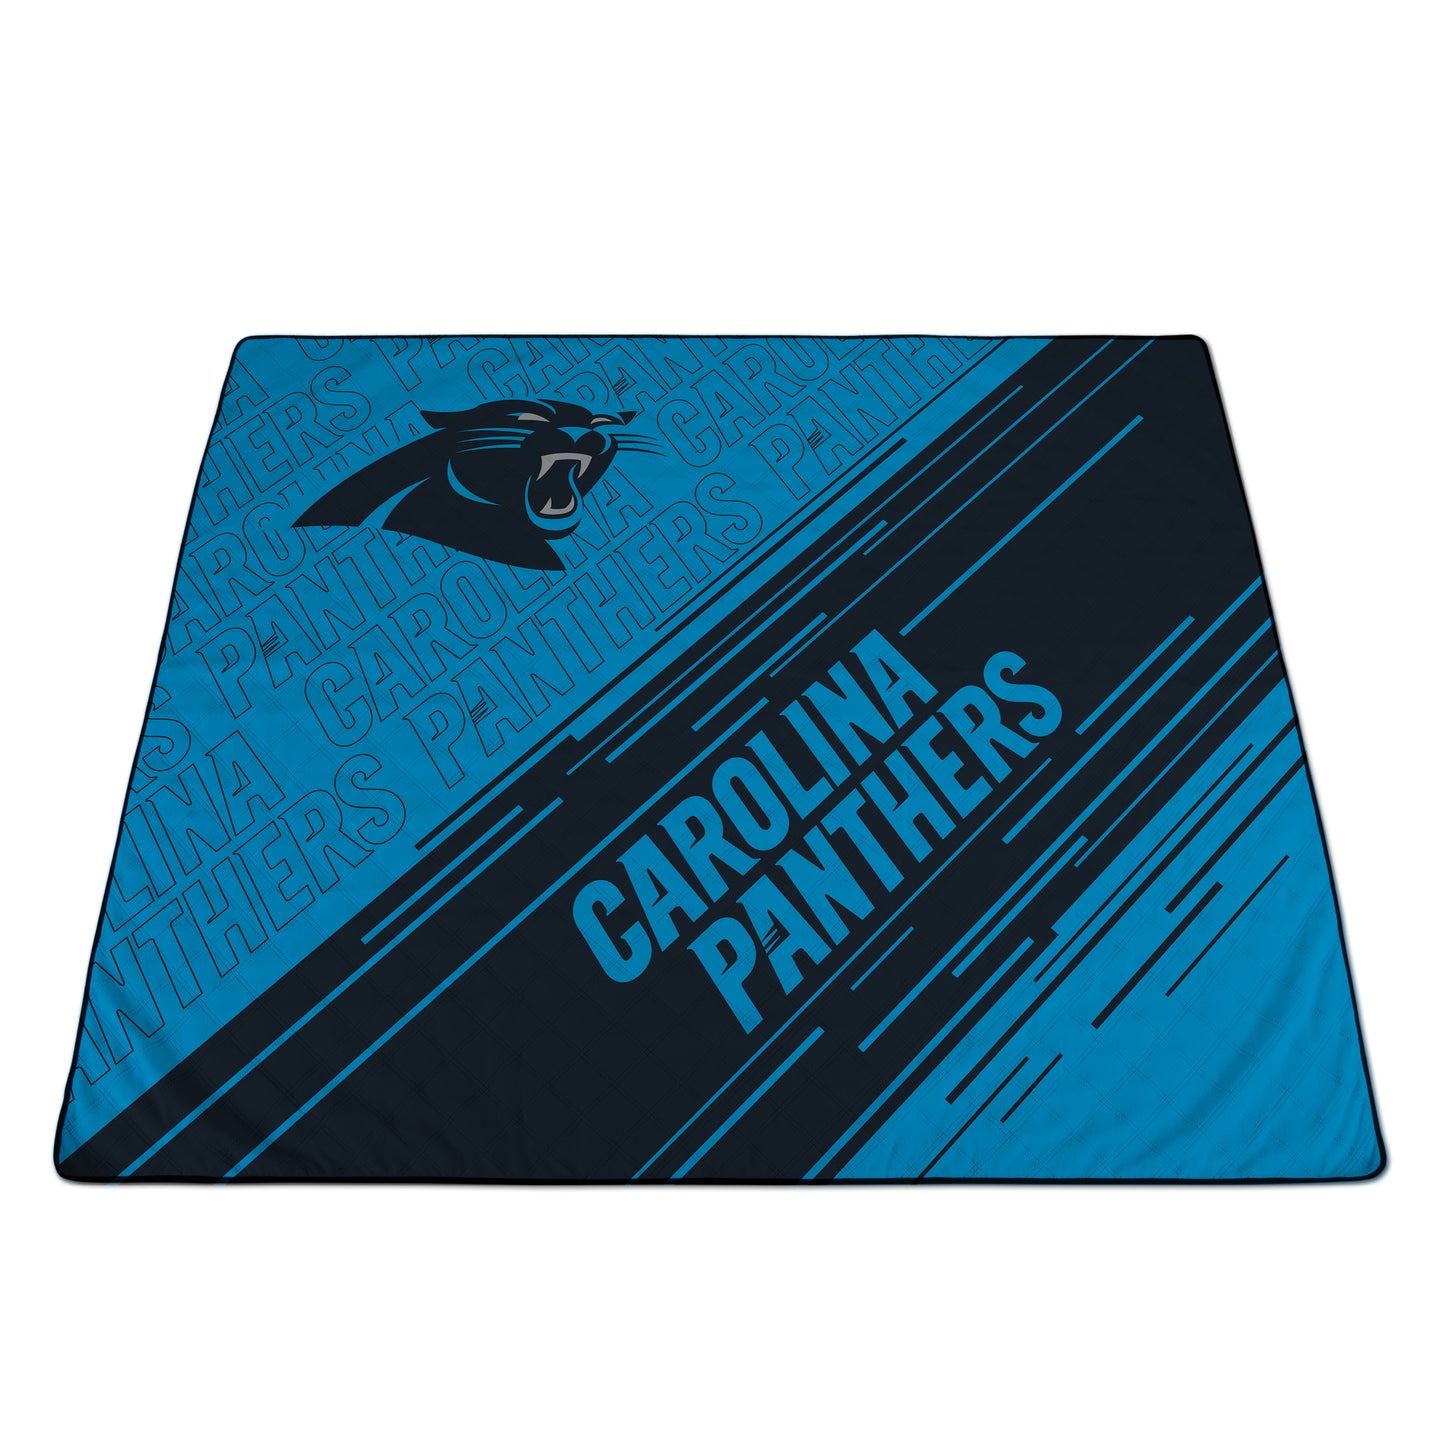 Carolina Panthers - Impresa Picnic Blanket